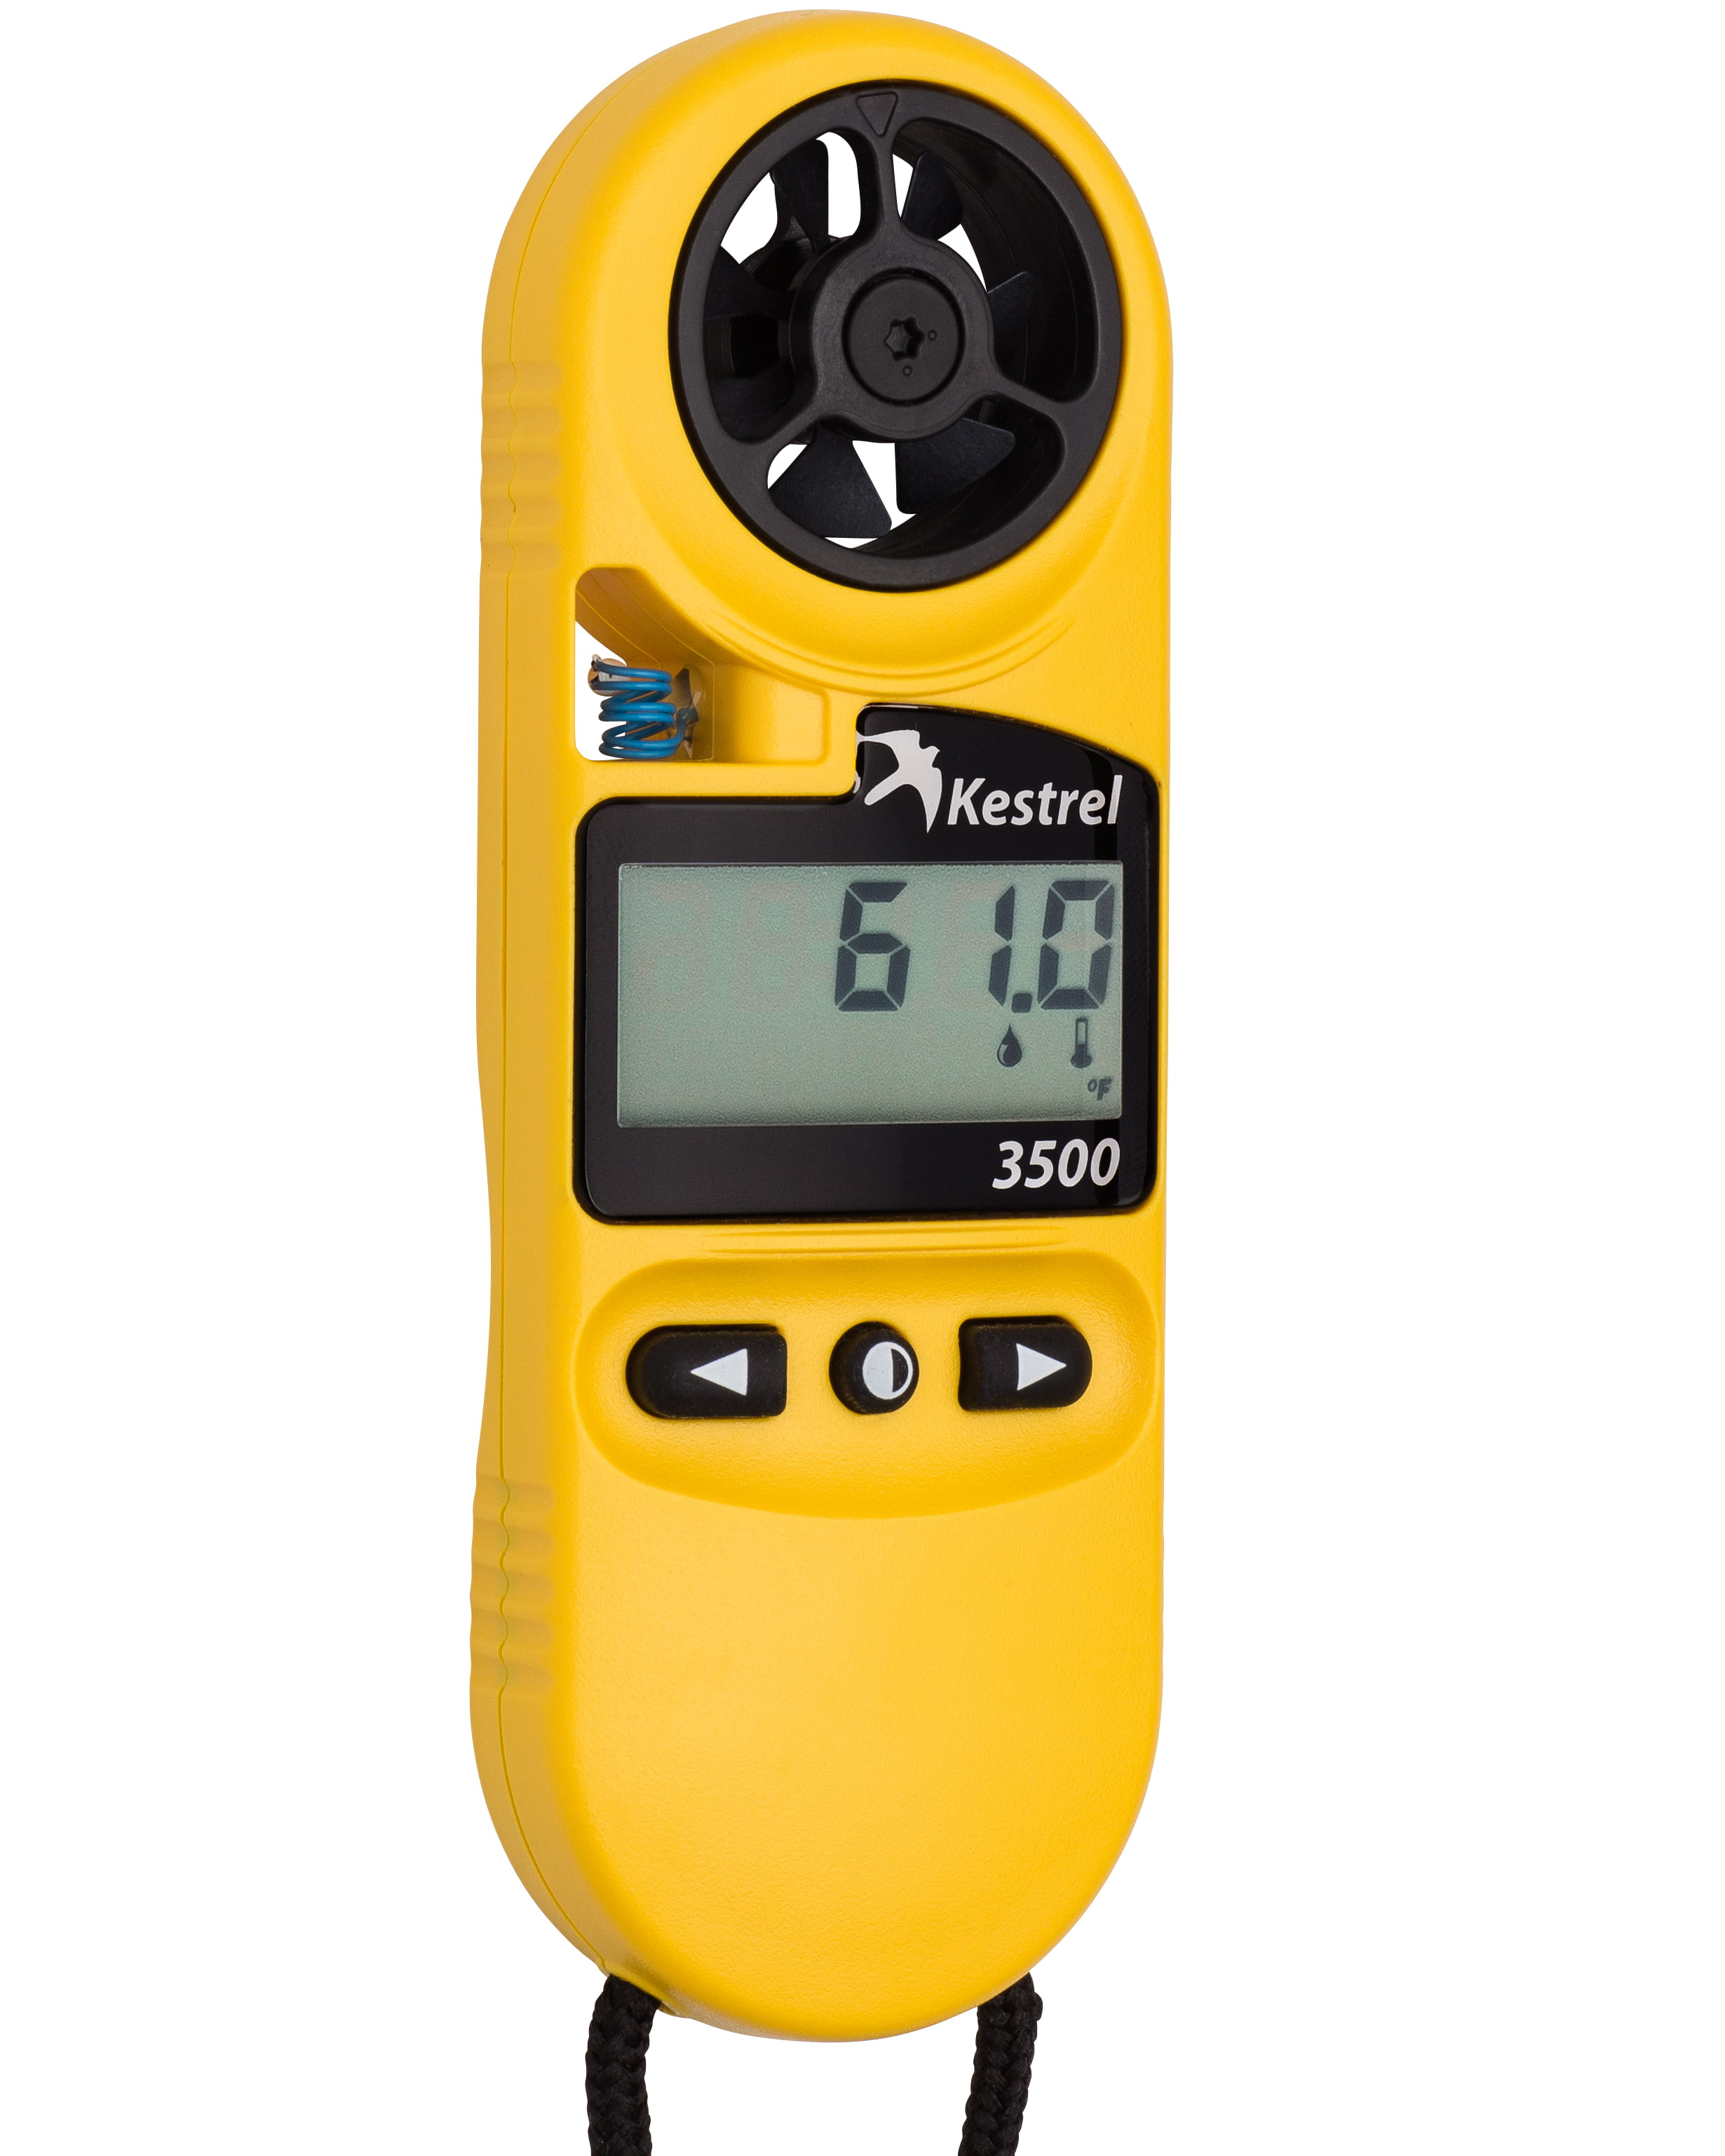 Temp 0835 Humidity Kestrel 3500 Wind Made in USA Yellow Pressure Meter